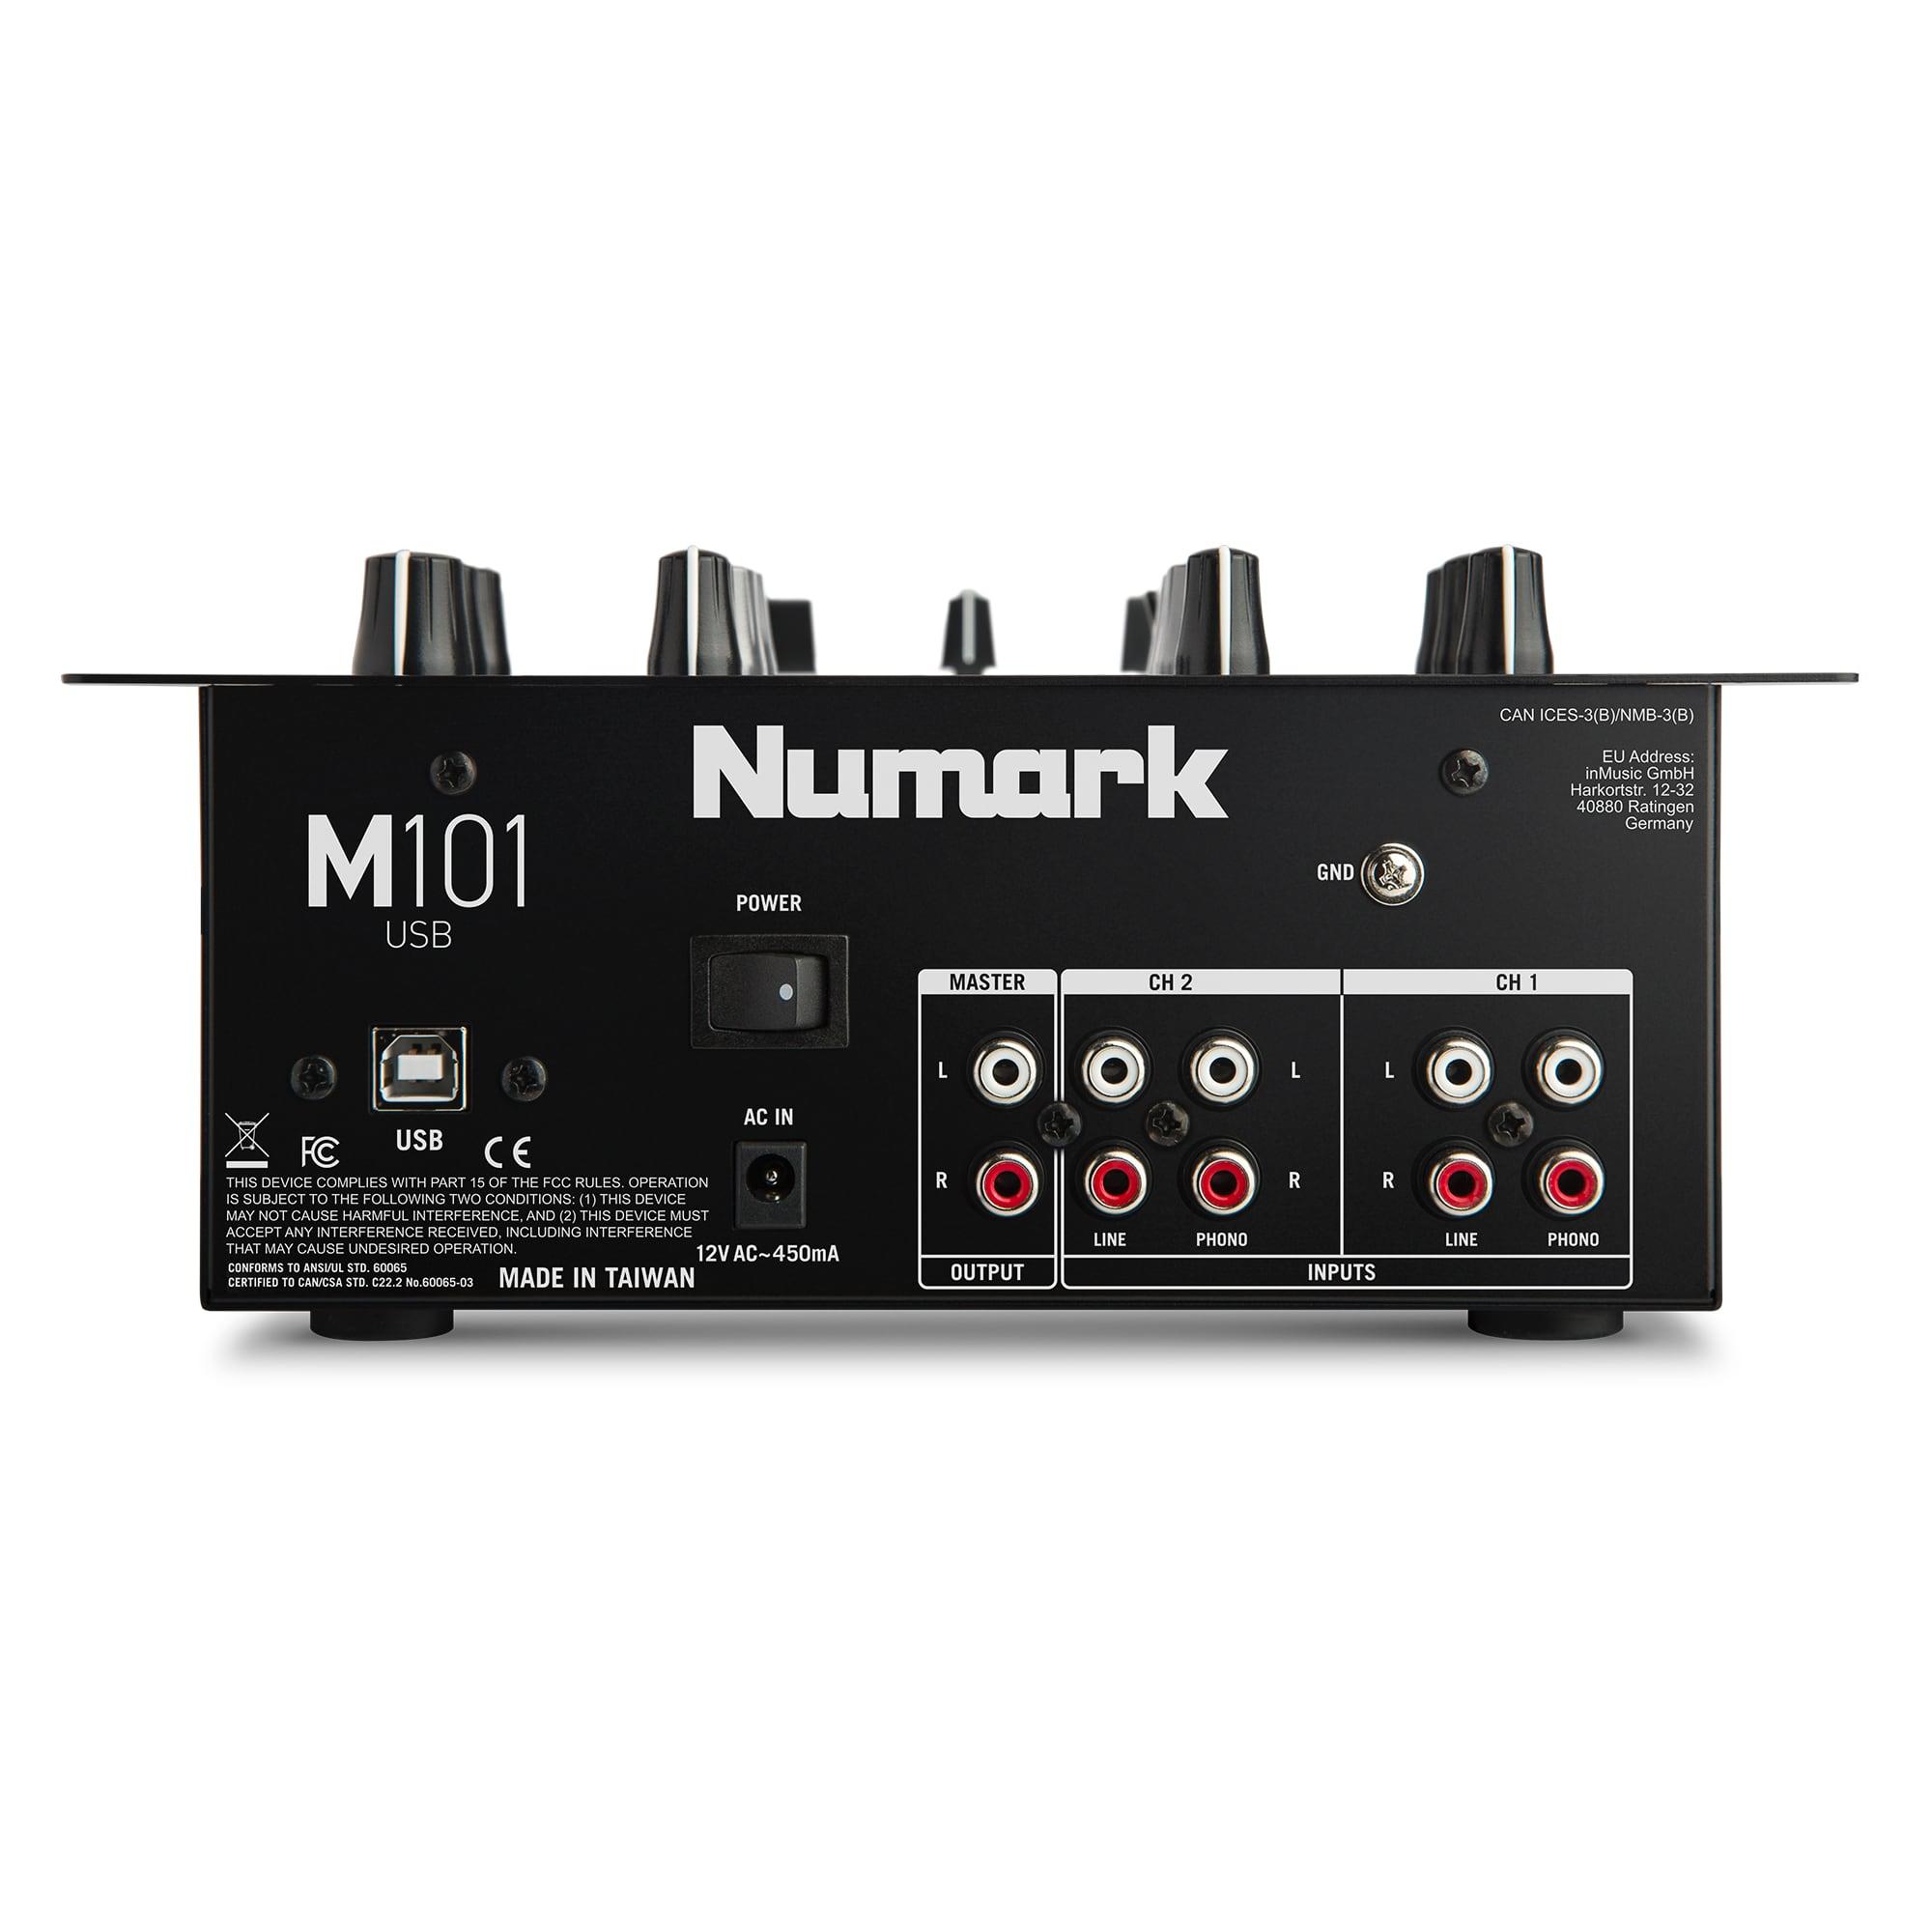 Numark M101 USB rear